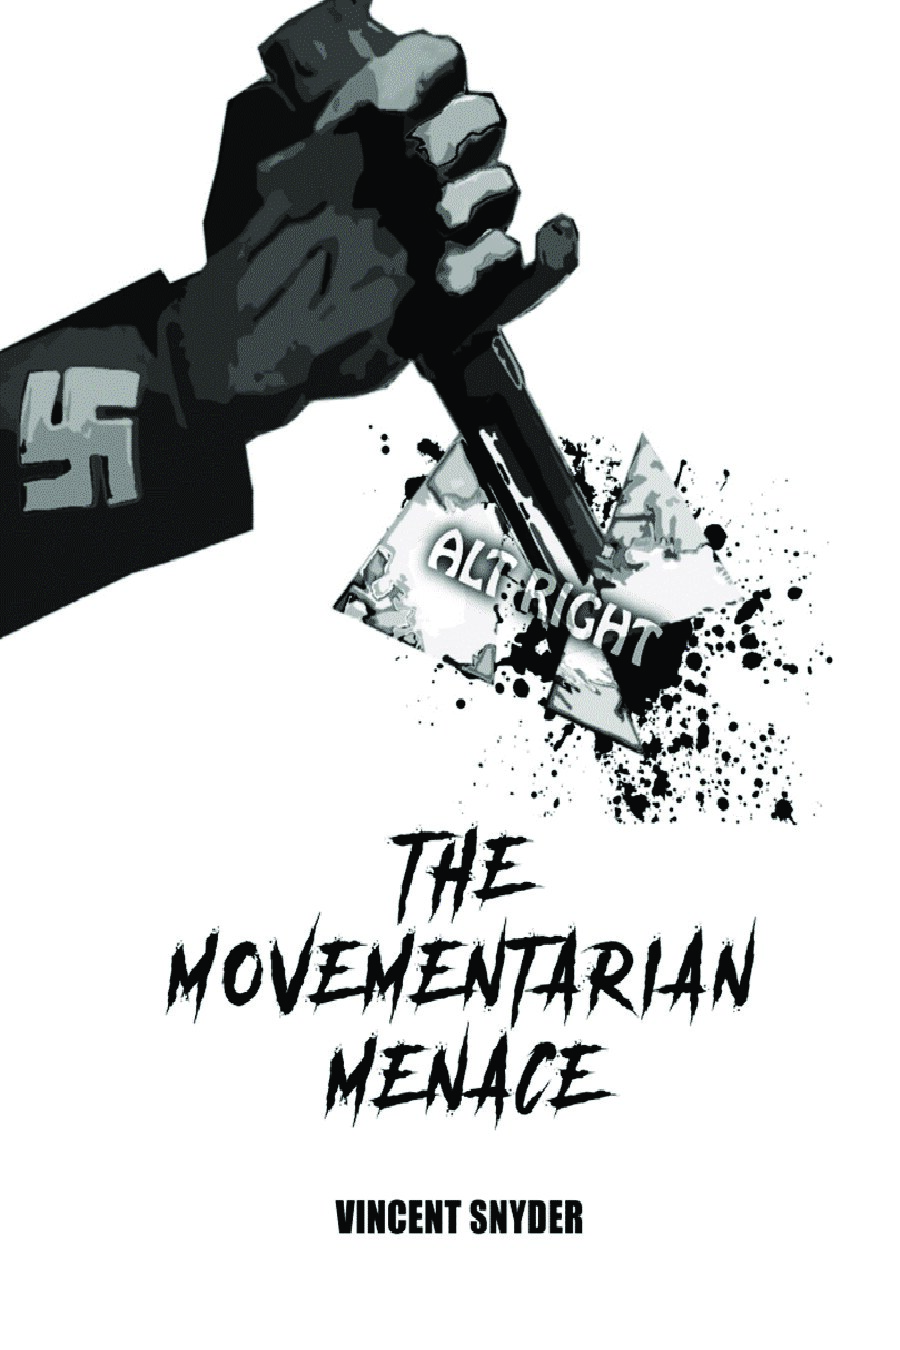 The Movementarian Menace